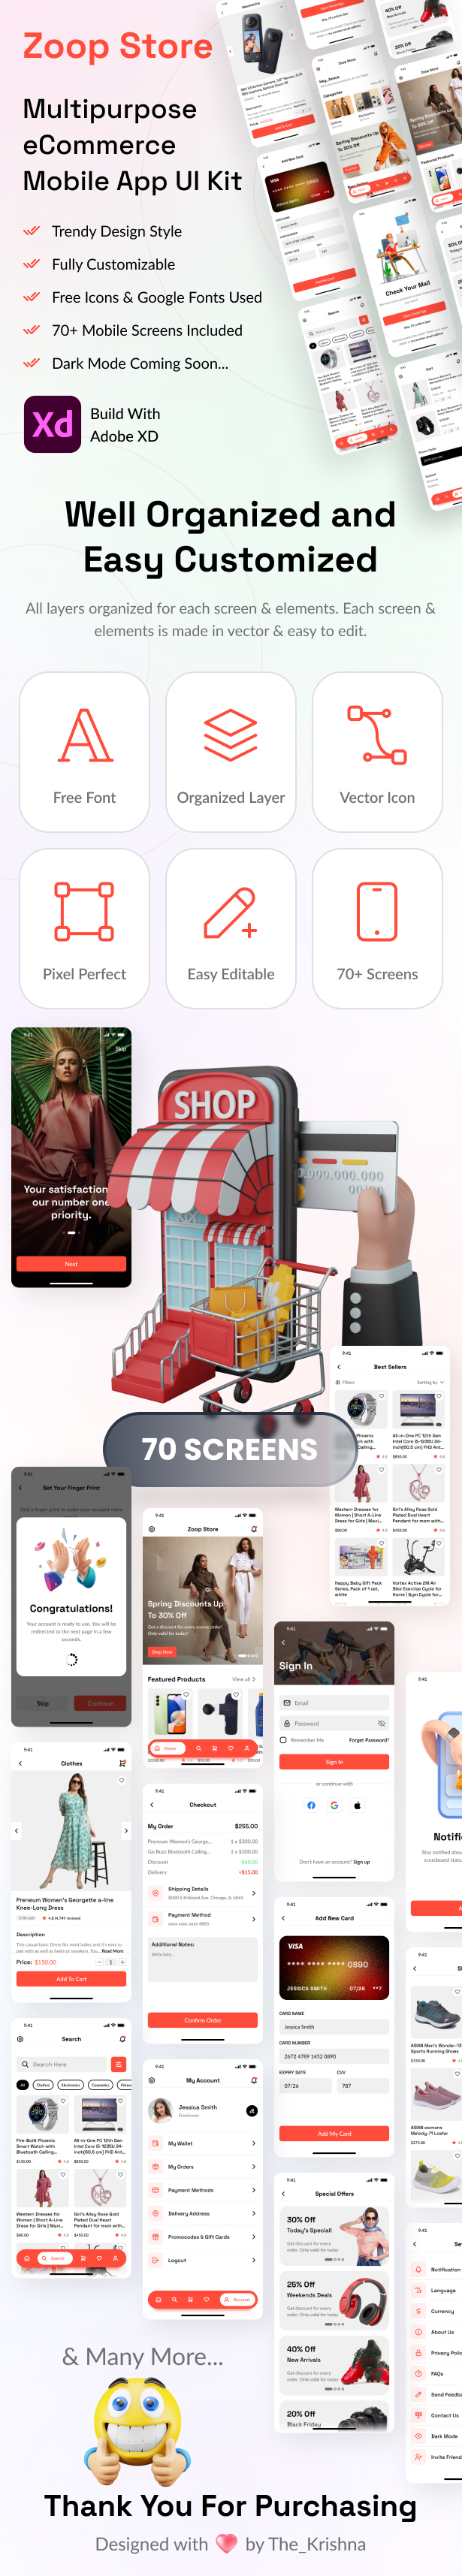 Multipurpose eCommerce Mobile App UI Kit XD Template - Zoopstore - 2